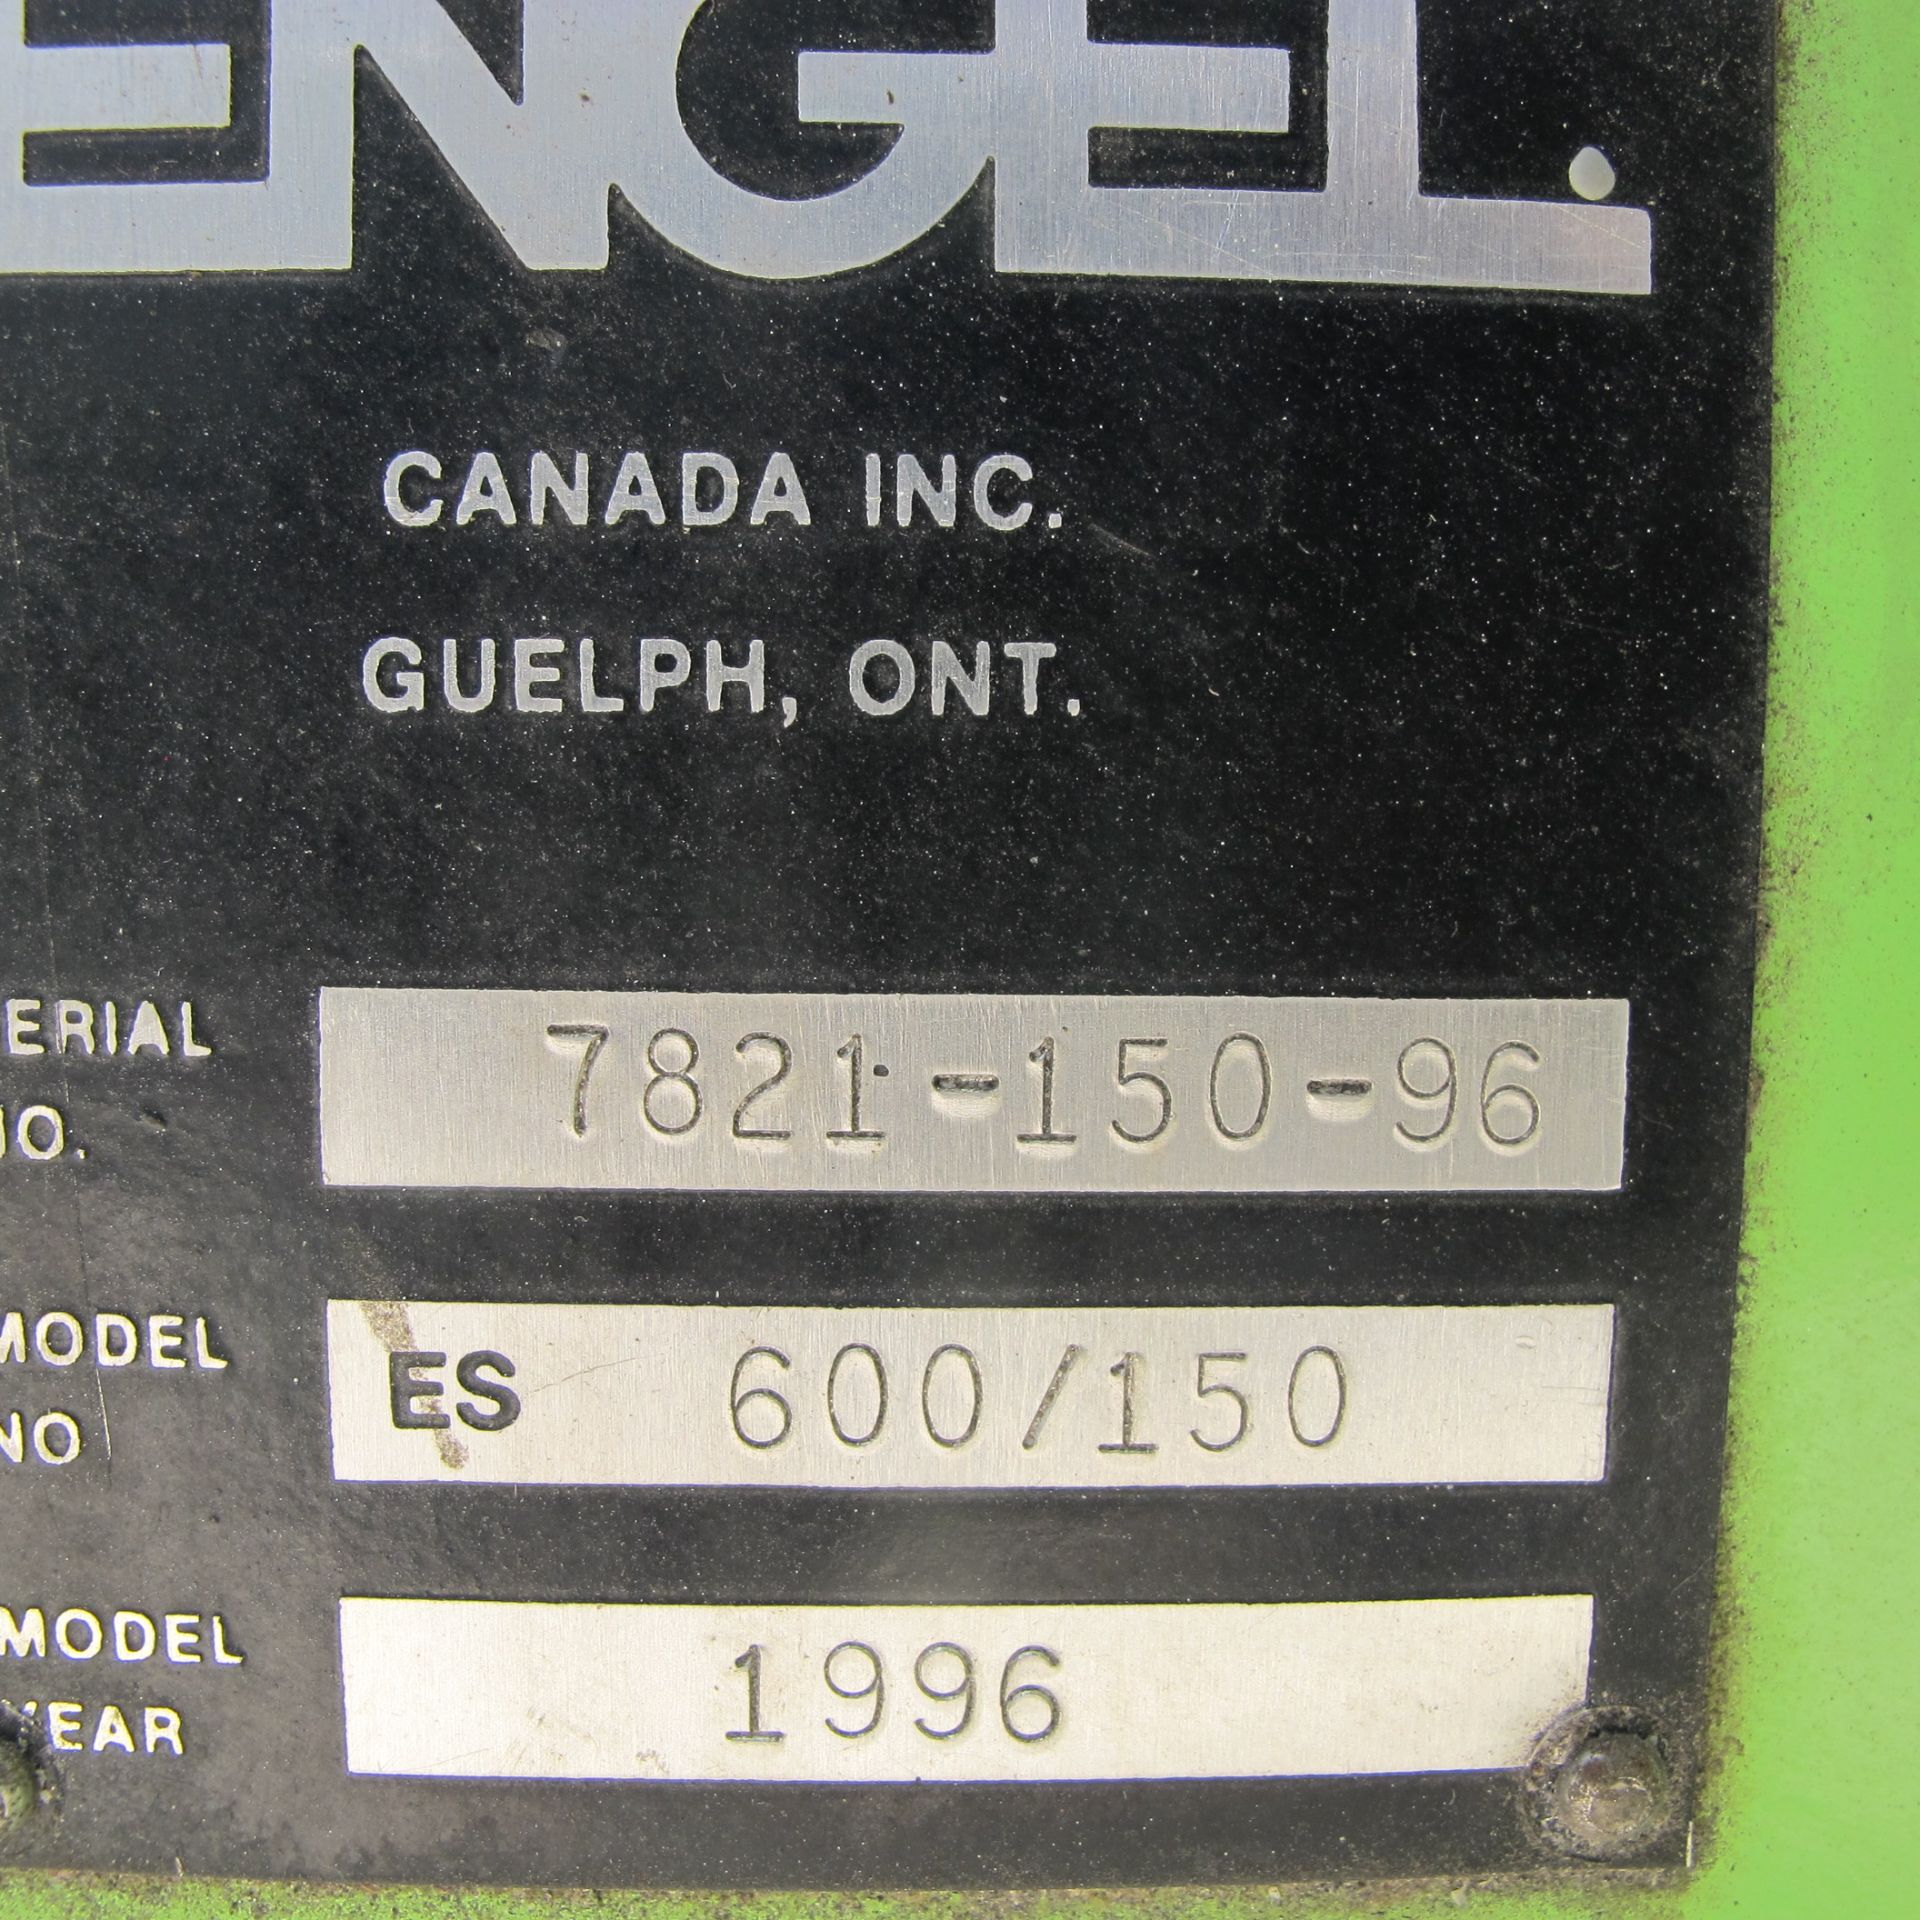 150 TON CAP ENGEL MODEL ES600/150 HORIZONTAL INJECTION MOLDING MACHINE, MFG 1996, S/N 7821-150-96 AS - Image 8 of 8